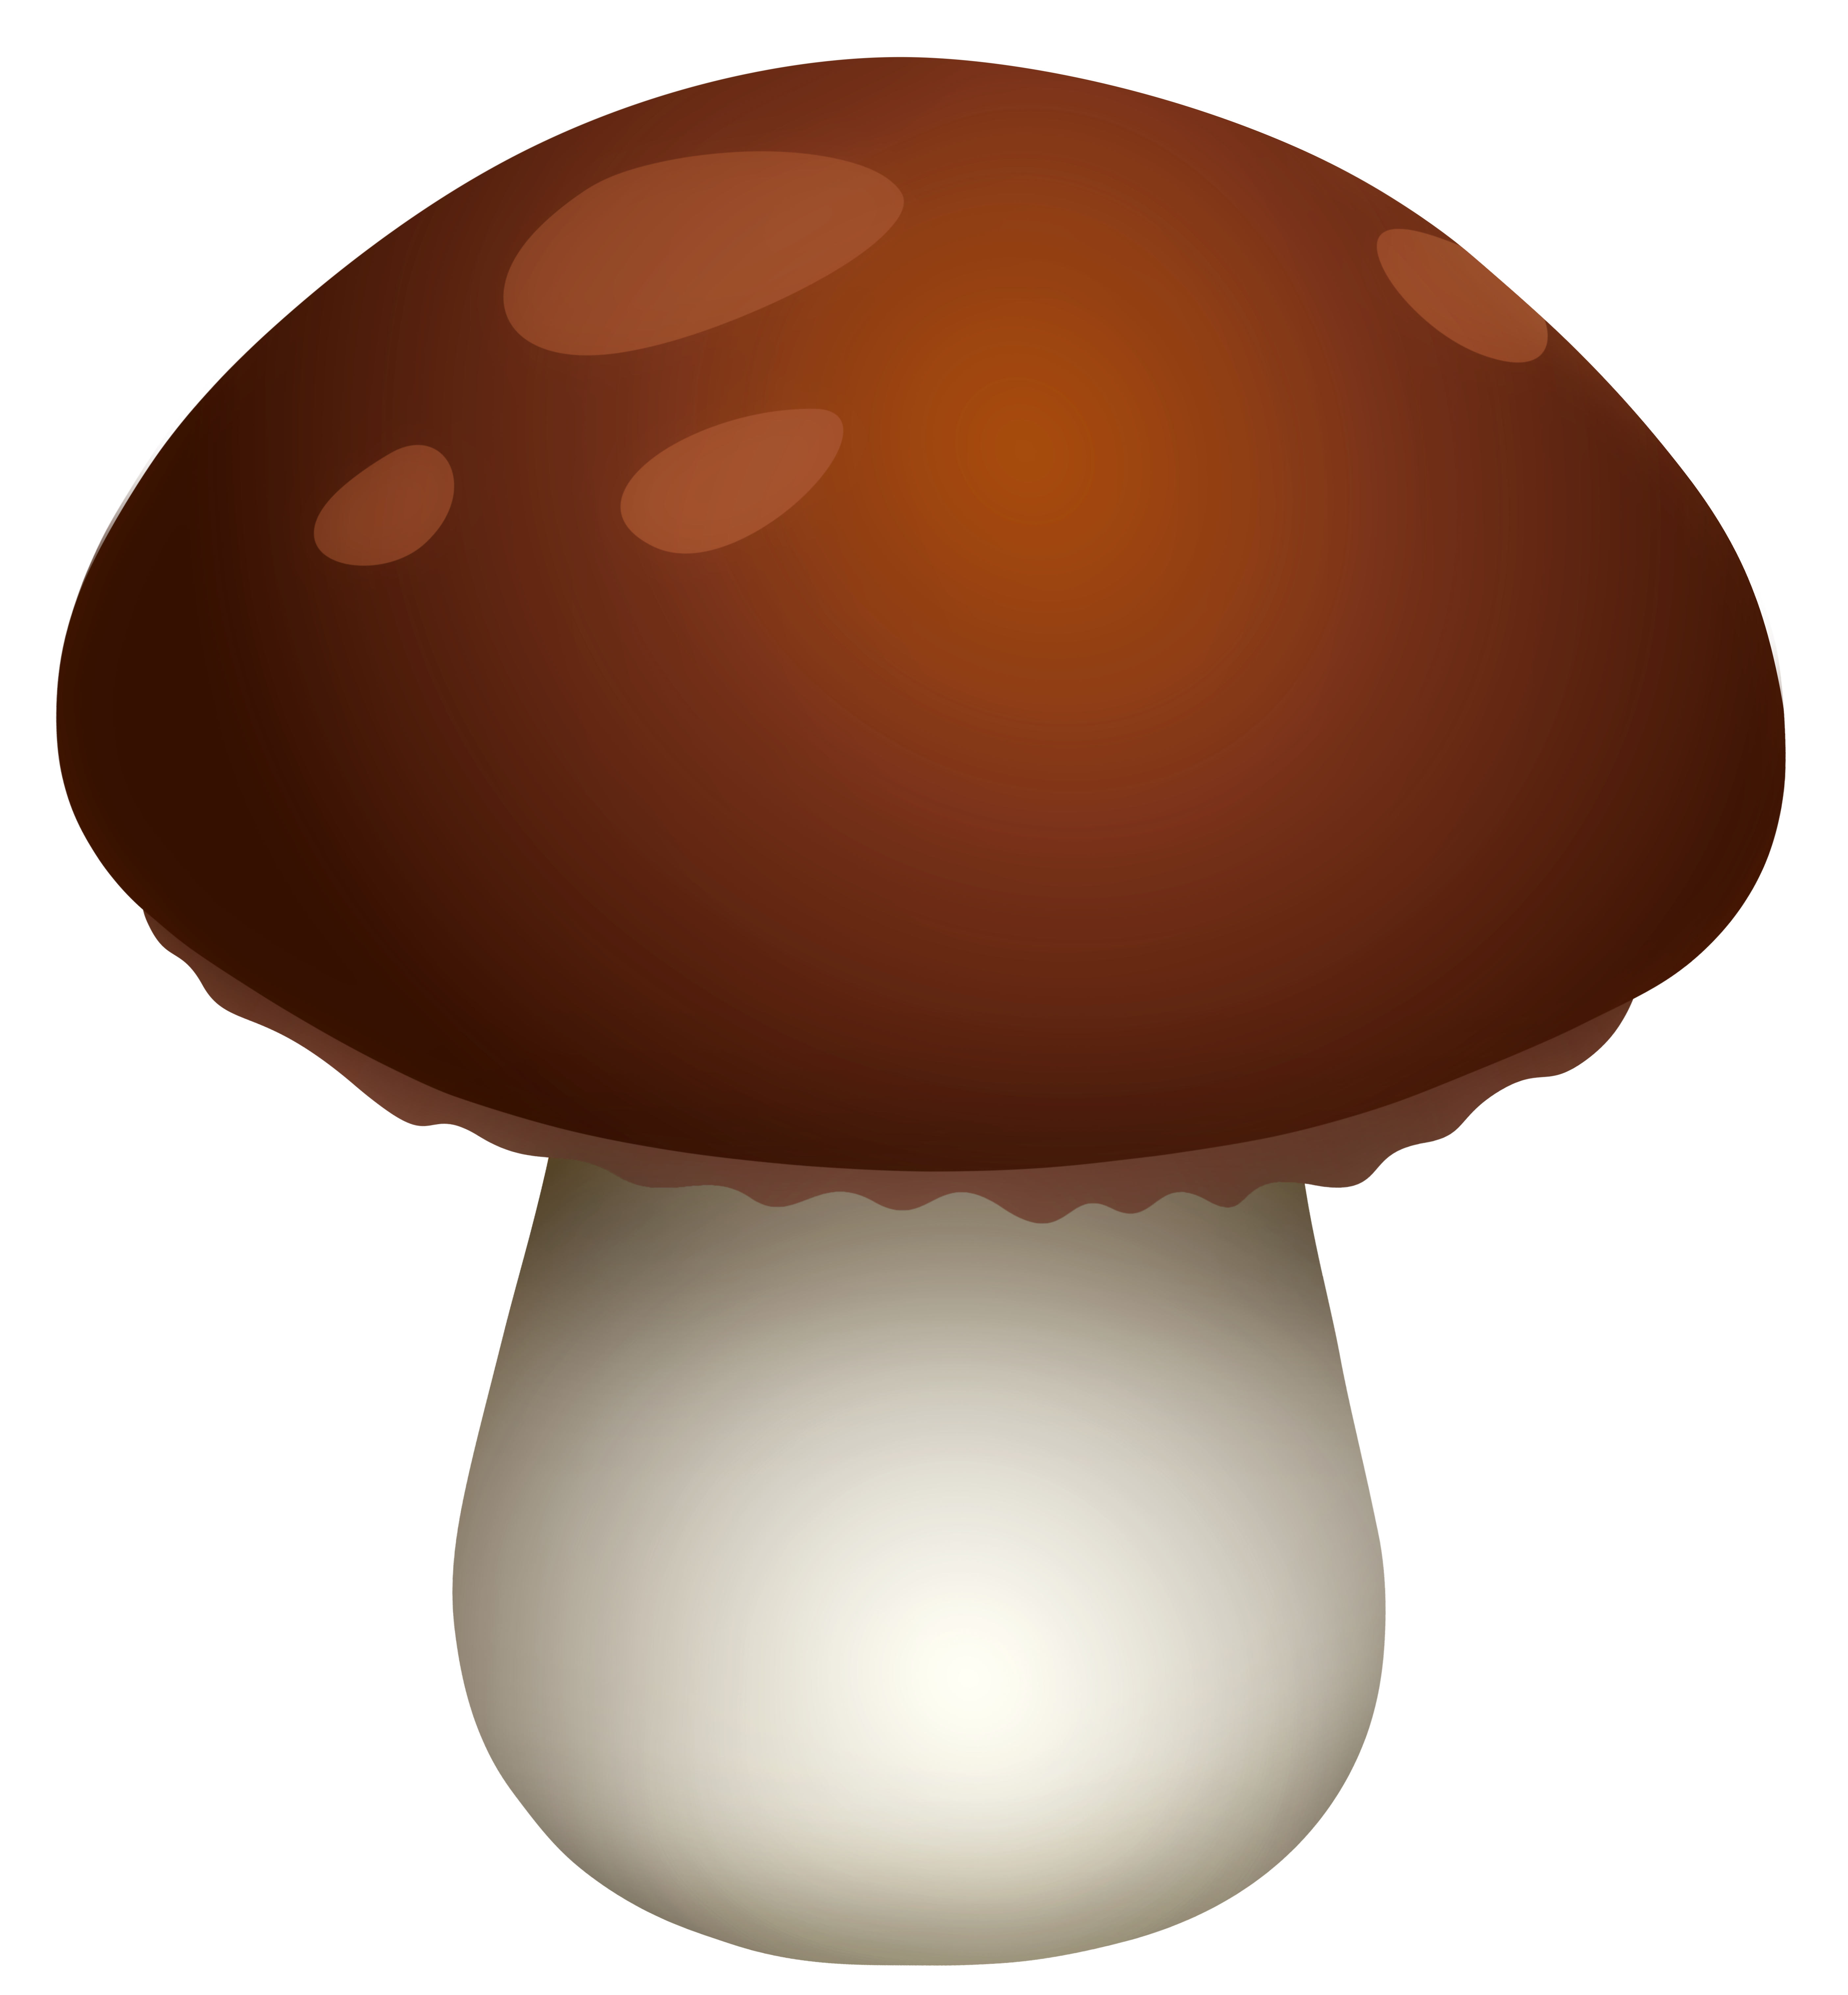 mushroom clipart picture - photo #26